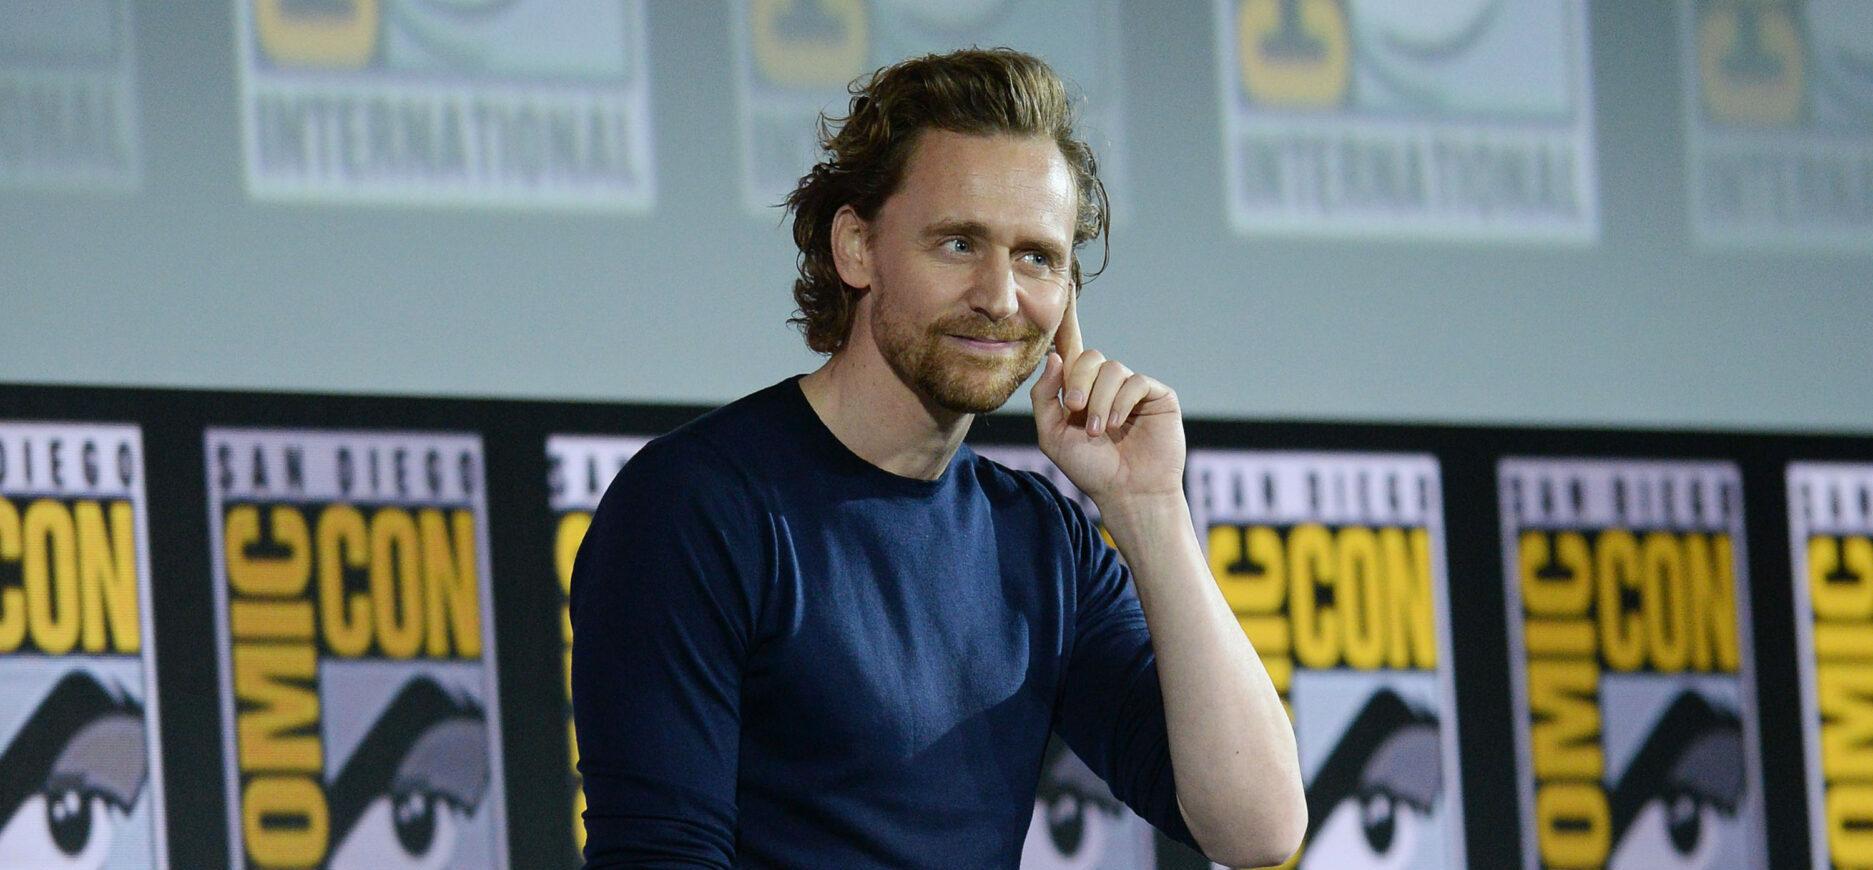 Tom Hiddleston at 2019 Comic-Con International: San Diego - Day 3 - "Impulse" Press Line